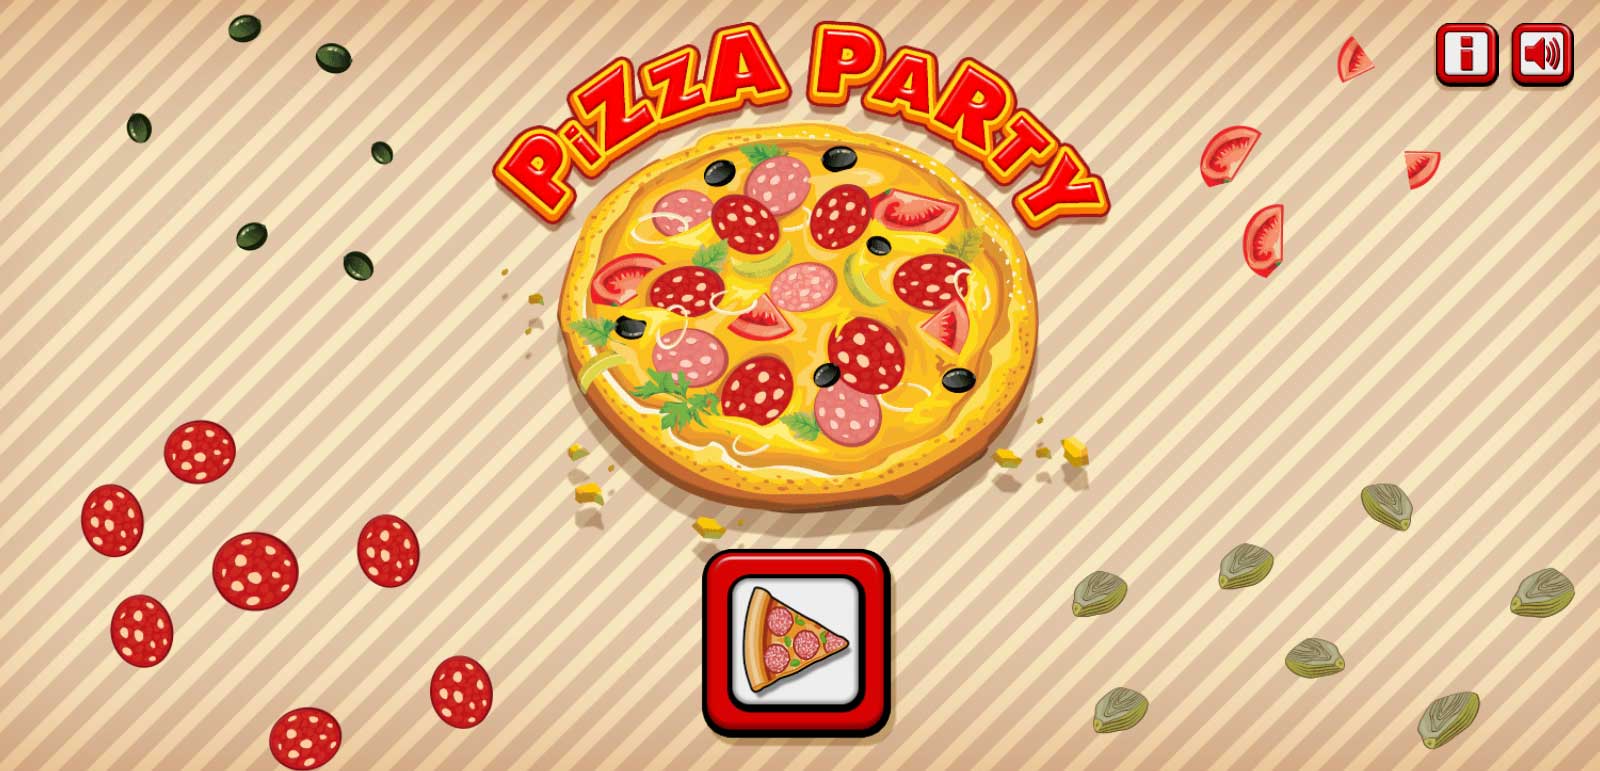 Игру пицца хотите. Игра пицца. Игра пицца для детей. Пицца вечеринка. Приложение для пиццерии.